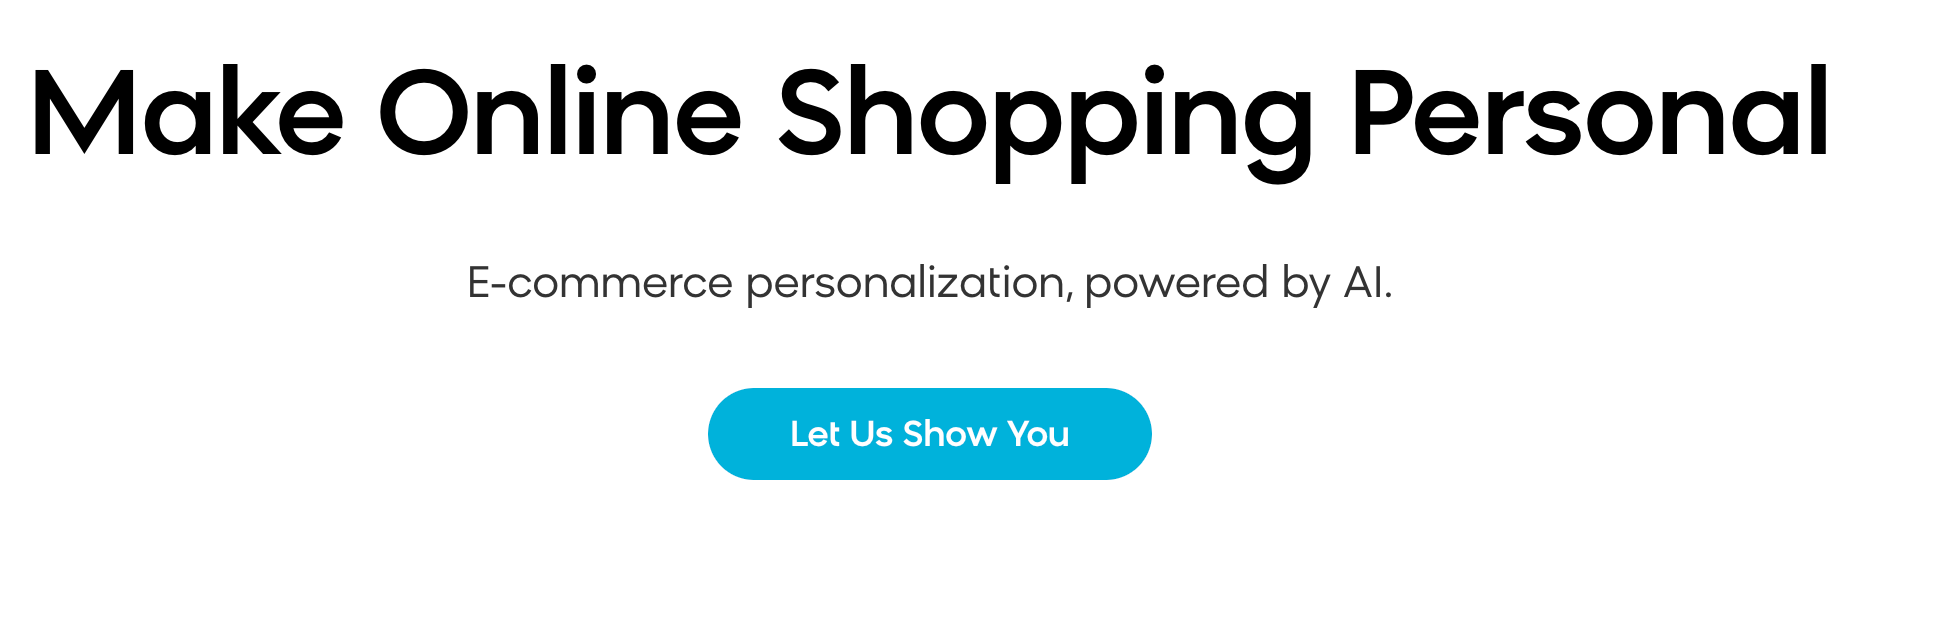 e-commerce personalization tool